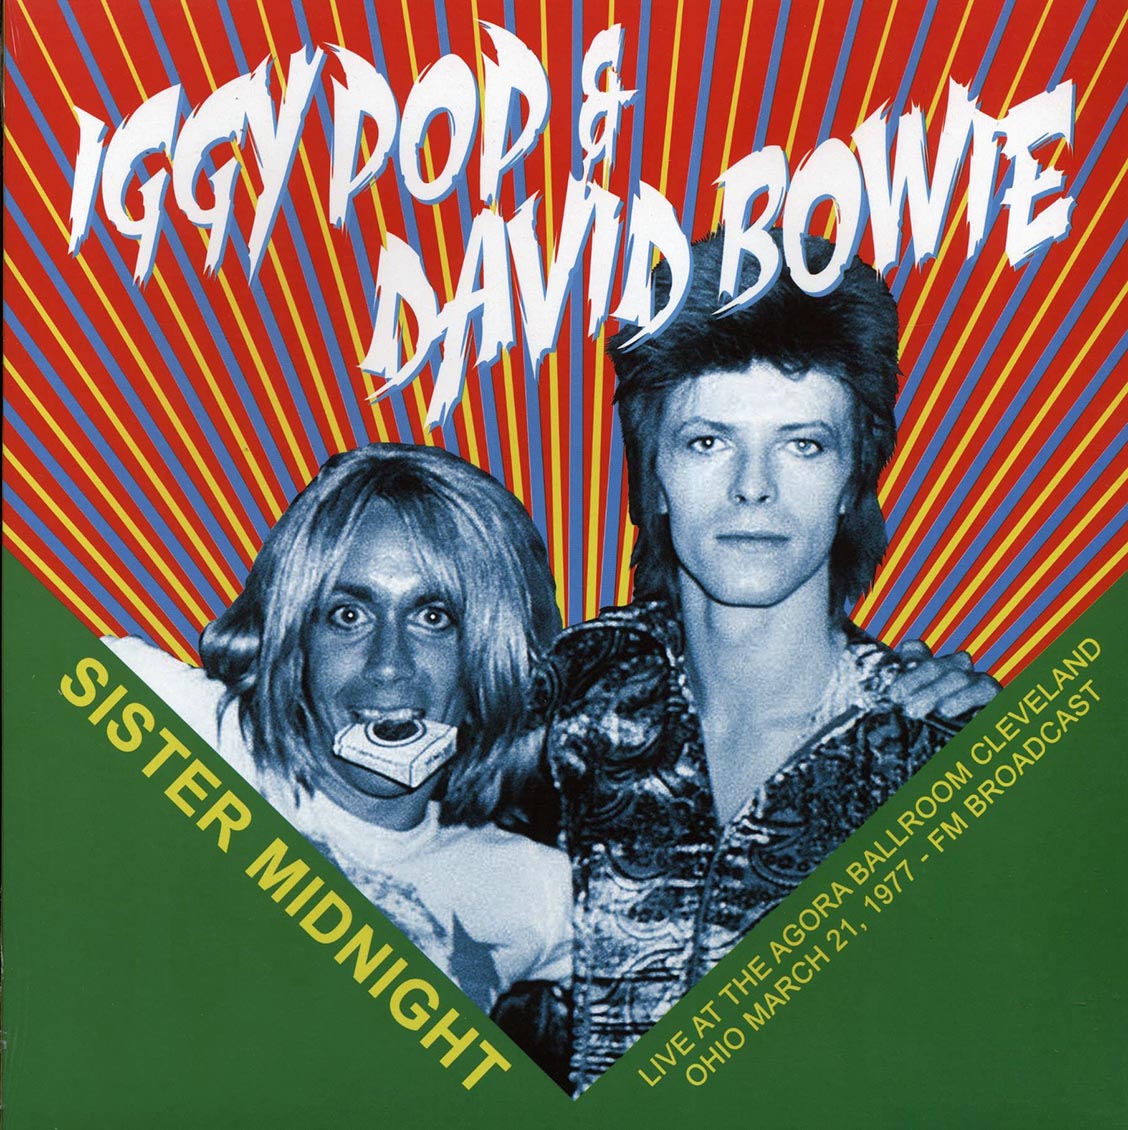 Iggy Pop, David Bowie "Sister Midnight: Live At The Agora Ballroom Cleveland Ohio, 1977" LP